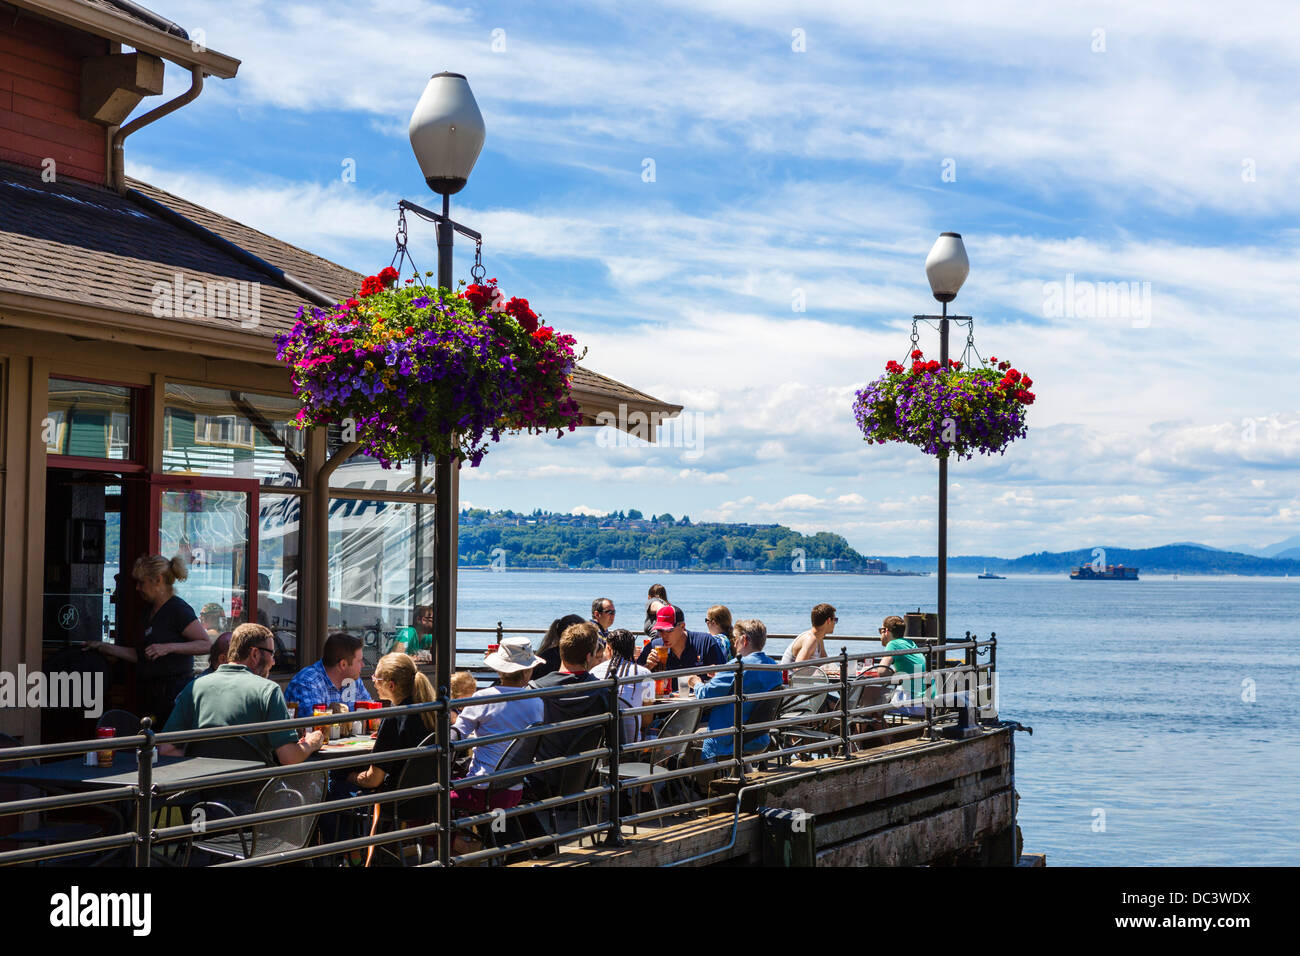 Red Robin waterfront cafe on Pier 55, Alaskan Way, Seattle, Washington, USA Stock Photo